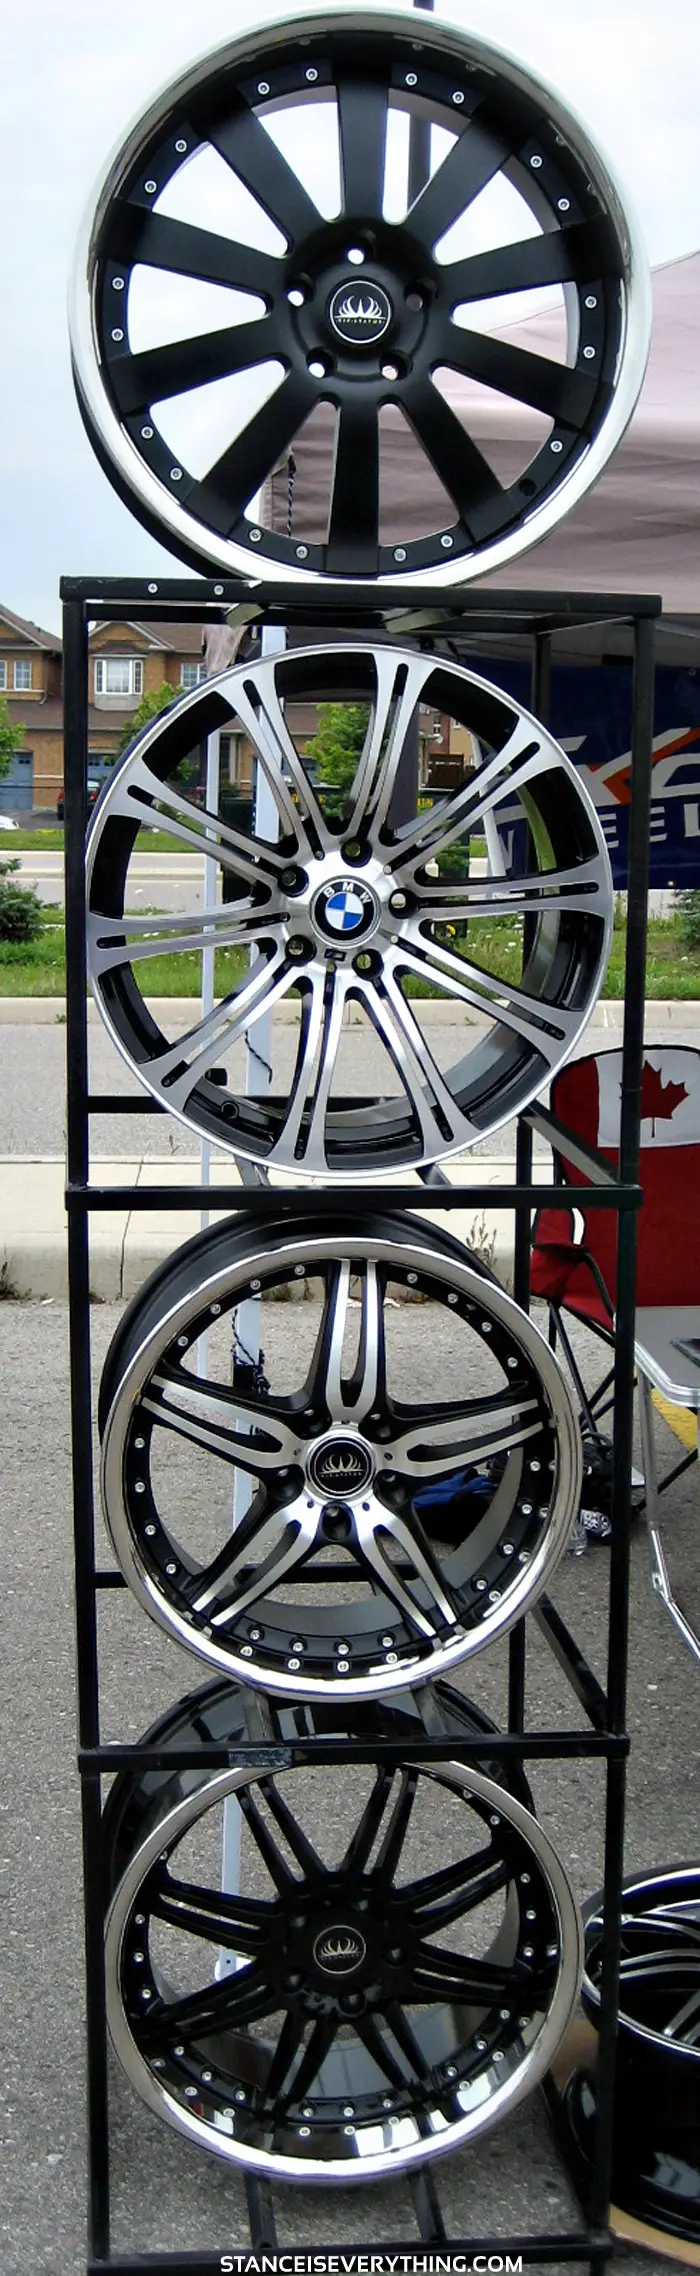 Exclusive tires wheel display